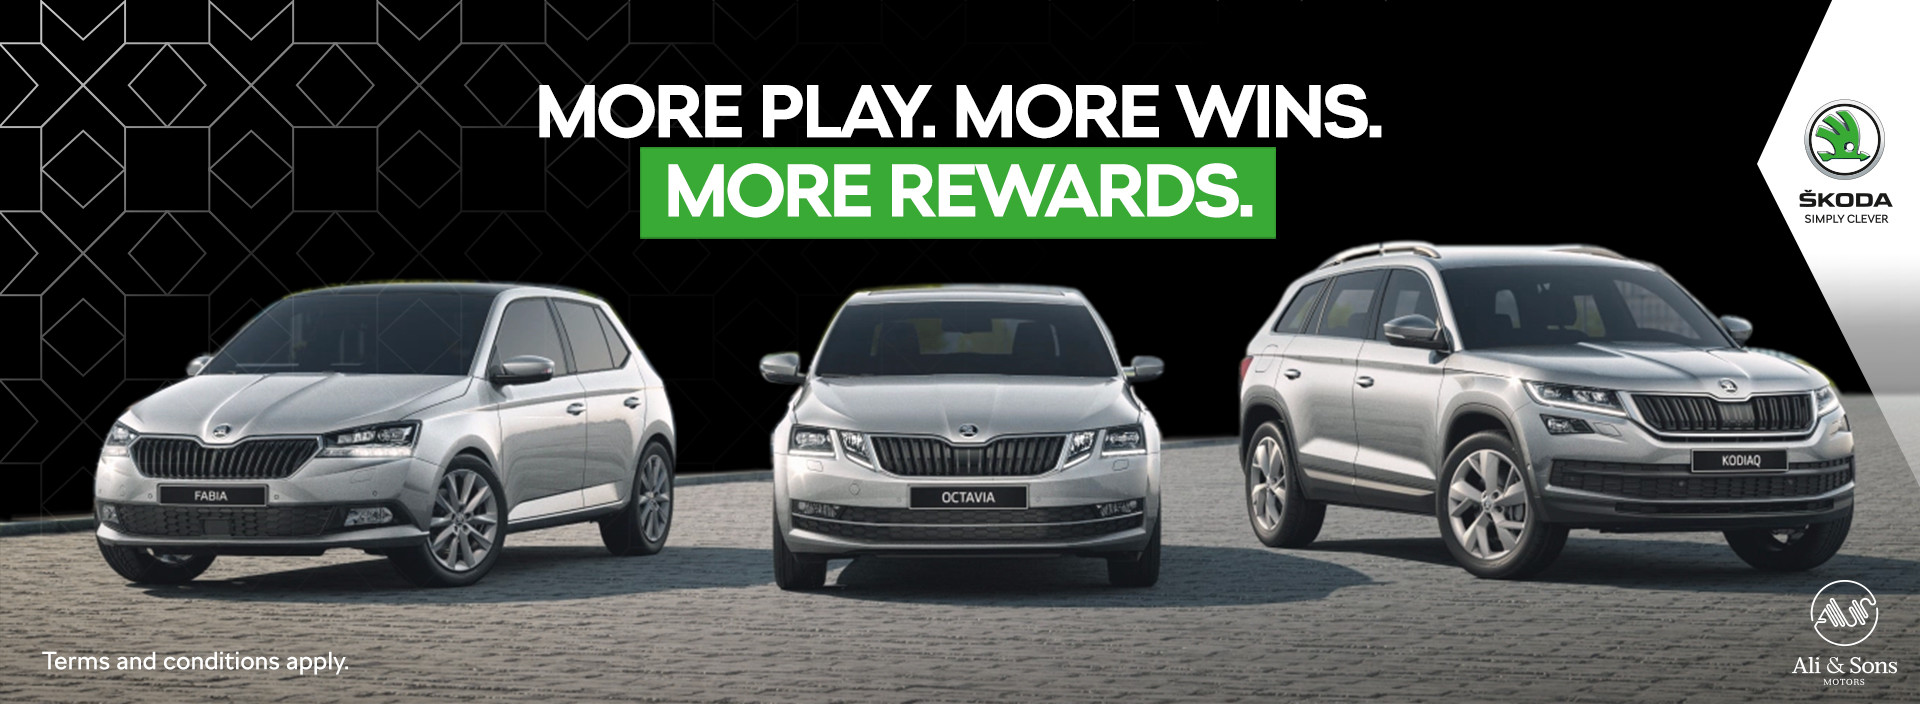 More Play. More Wins. More Rewards.